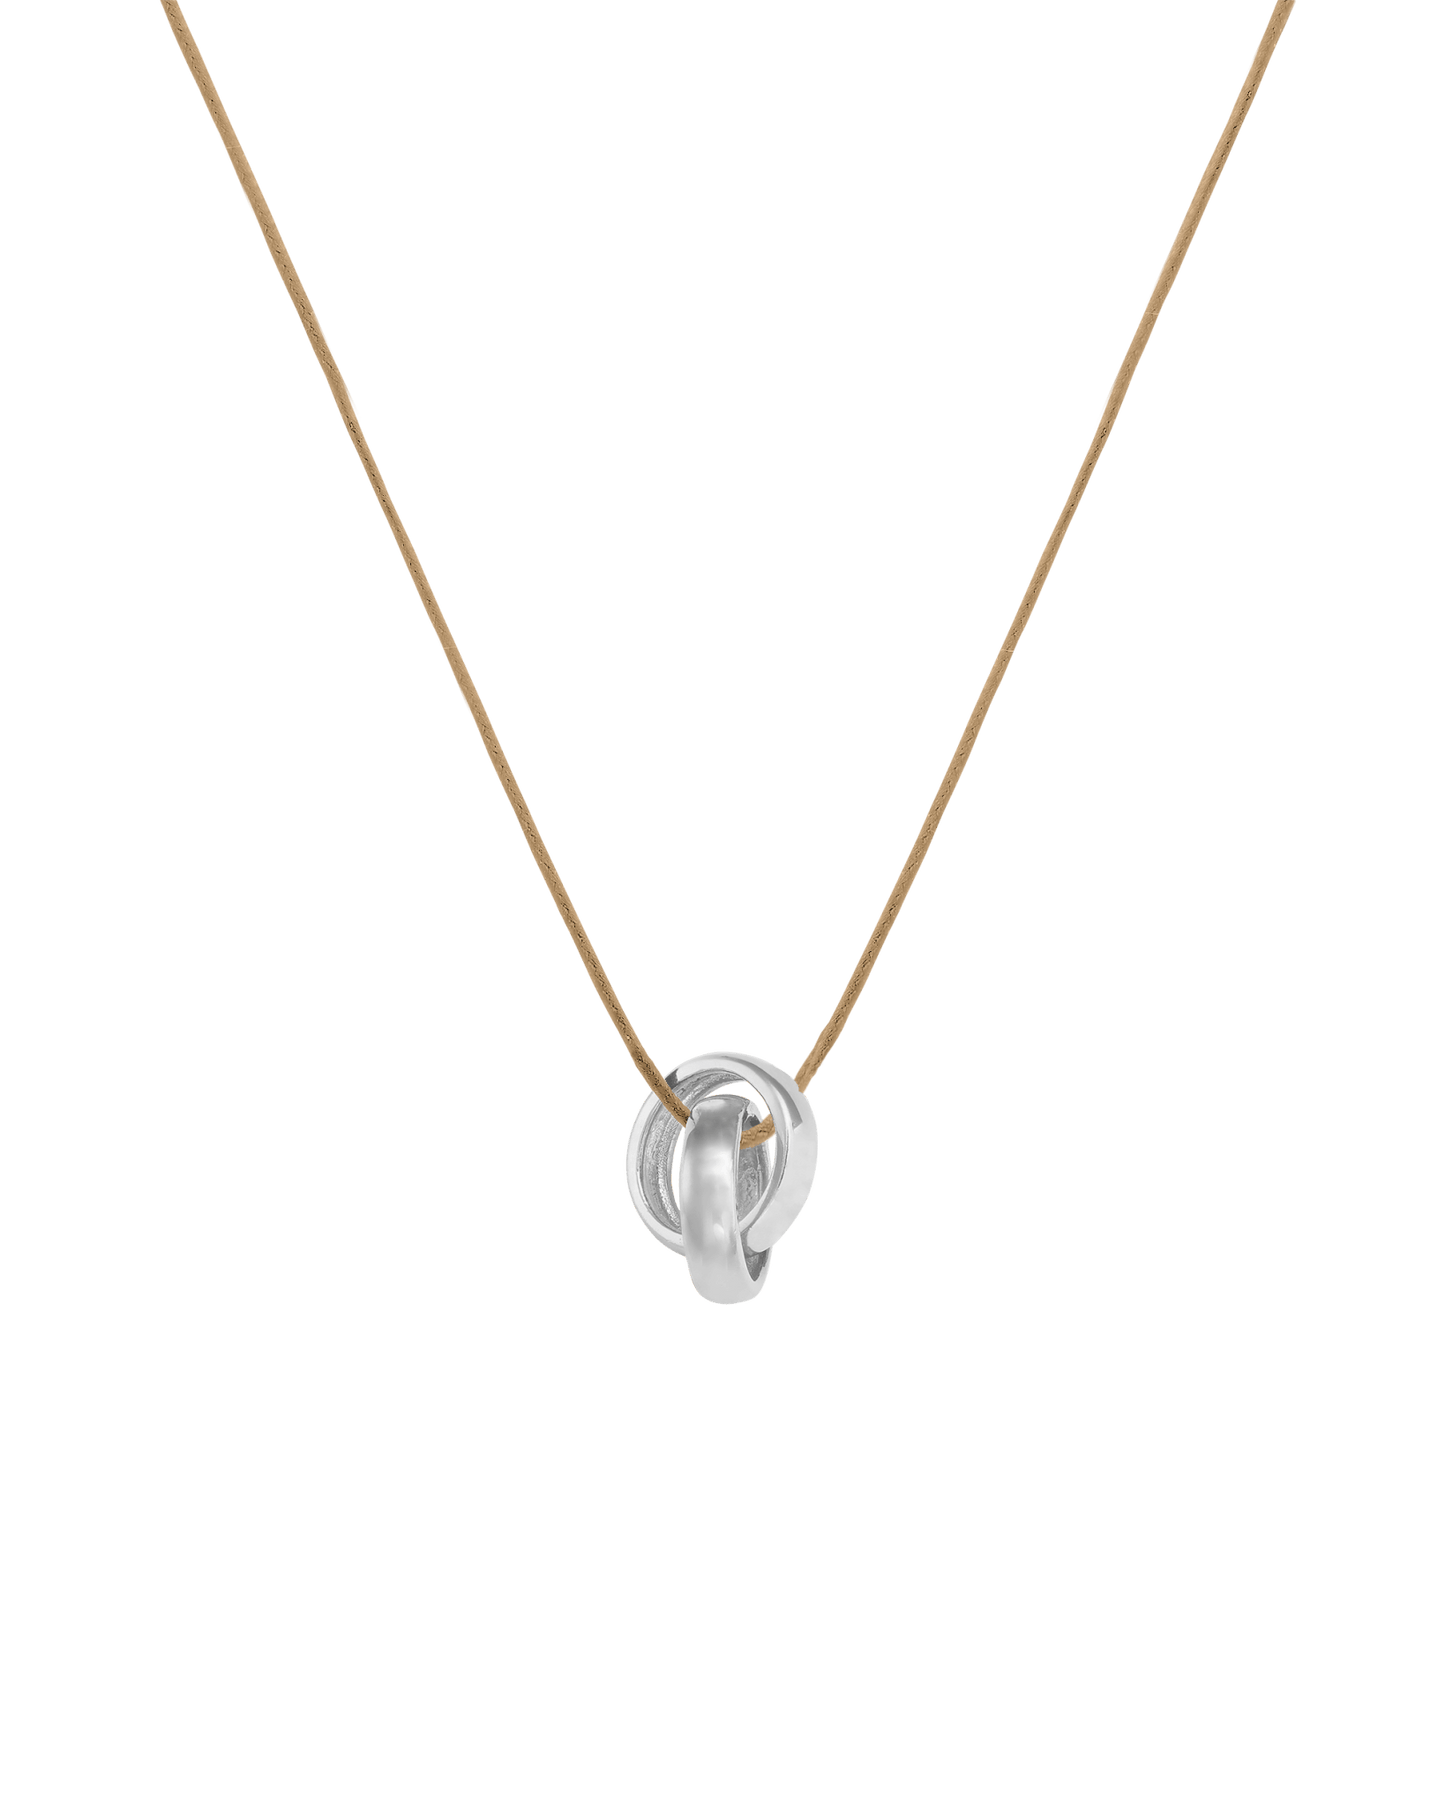 Engravable Links Necklace - 14K White Gold Necklaces 14K Solid Gold 2 Camel 